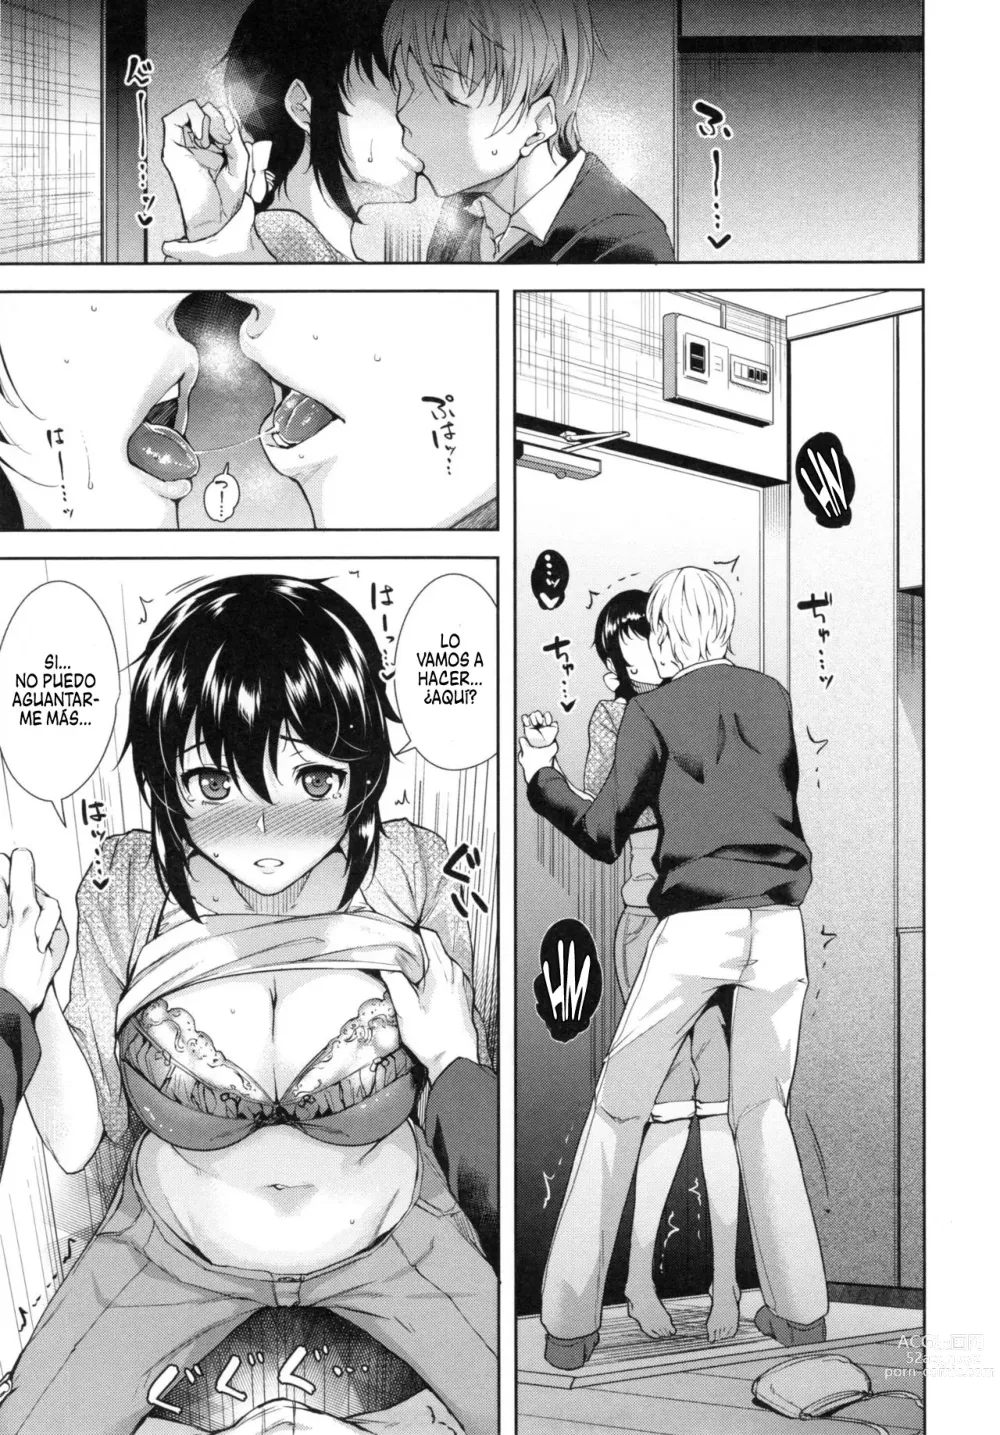 Page 7 of manga ¿Truco o Engaño?